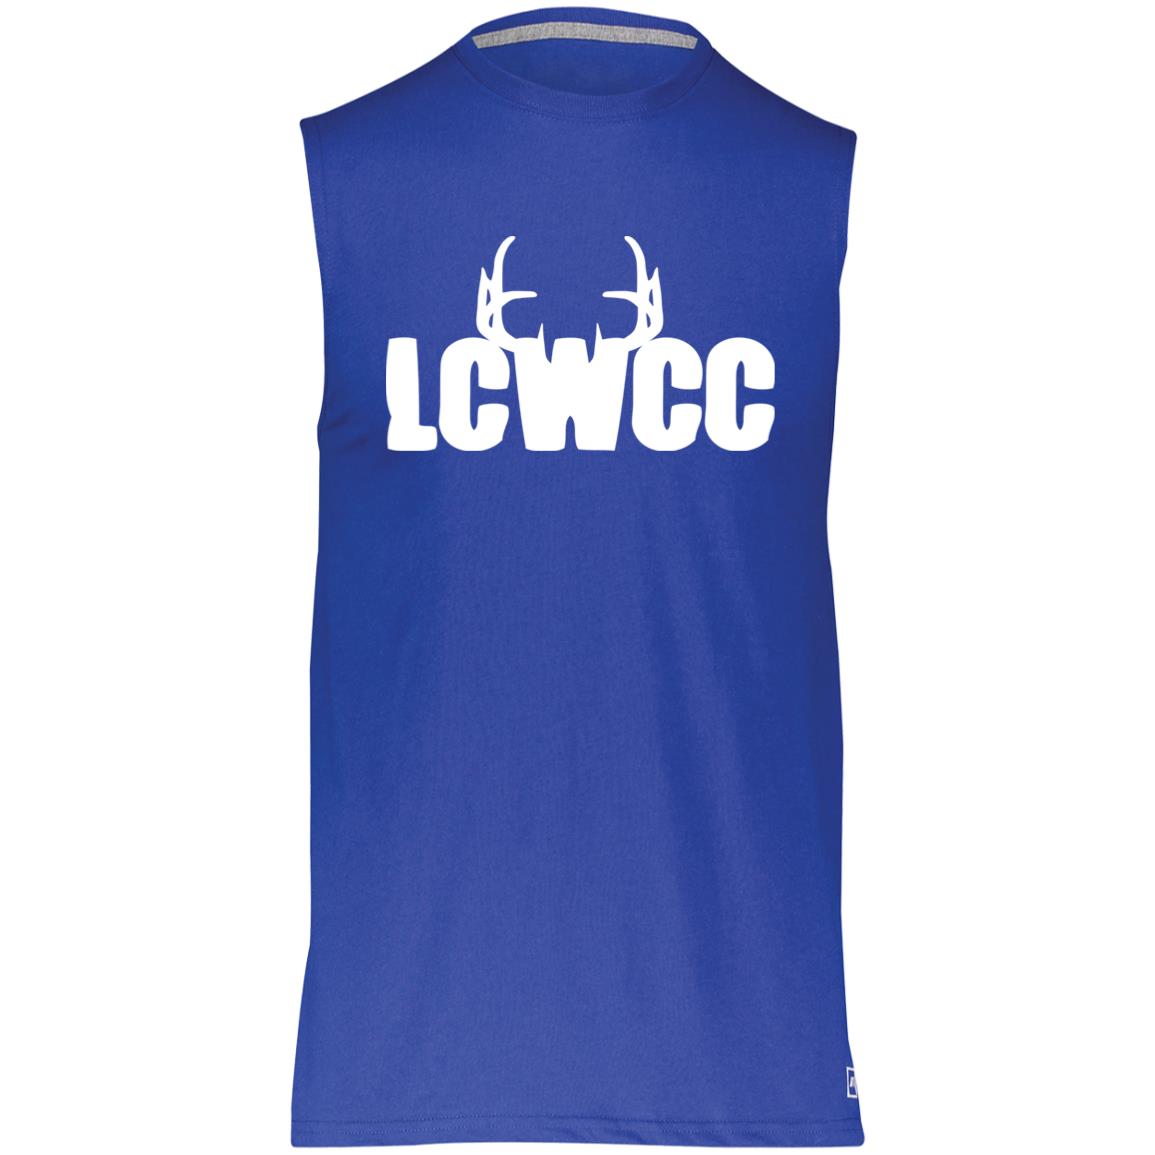 LCWCC Rack Logo - White 64MTTM Sun Protection Muscle Tee